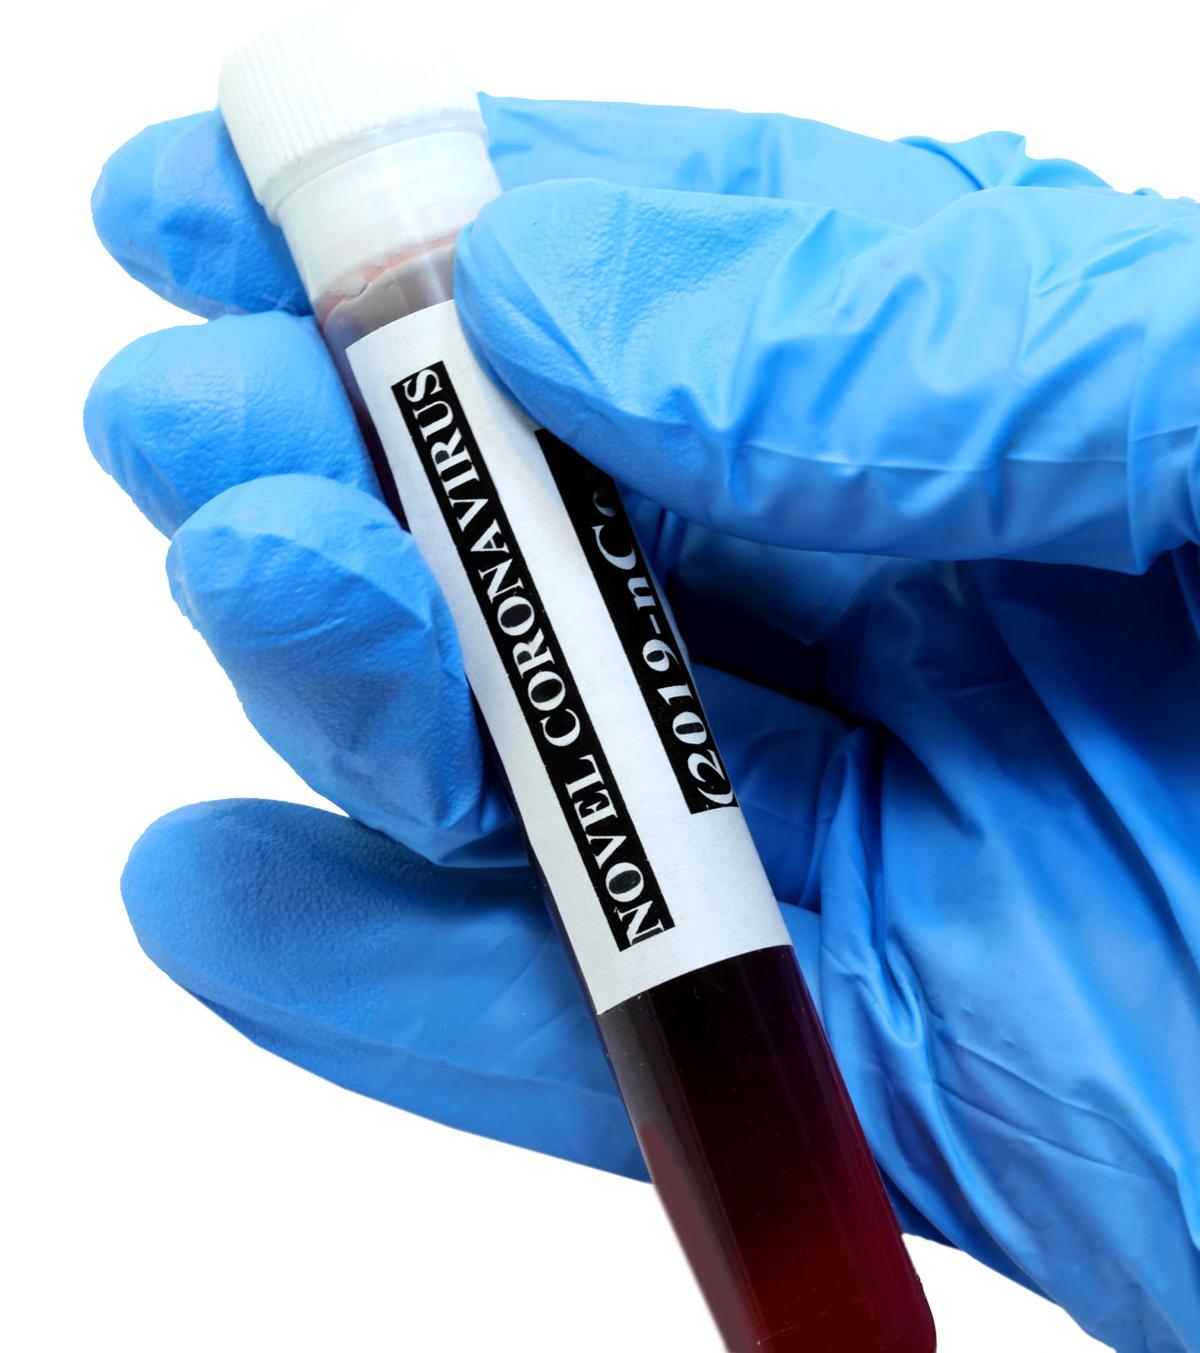 test tube for blood tests of Coronavirus on white background